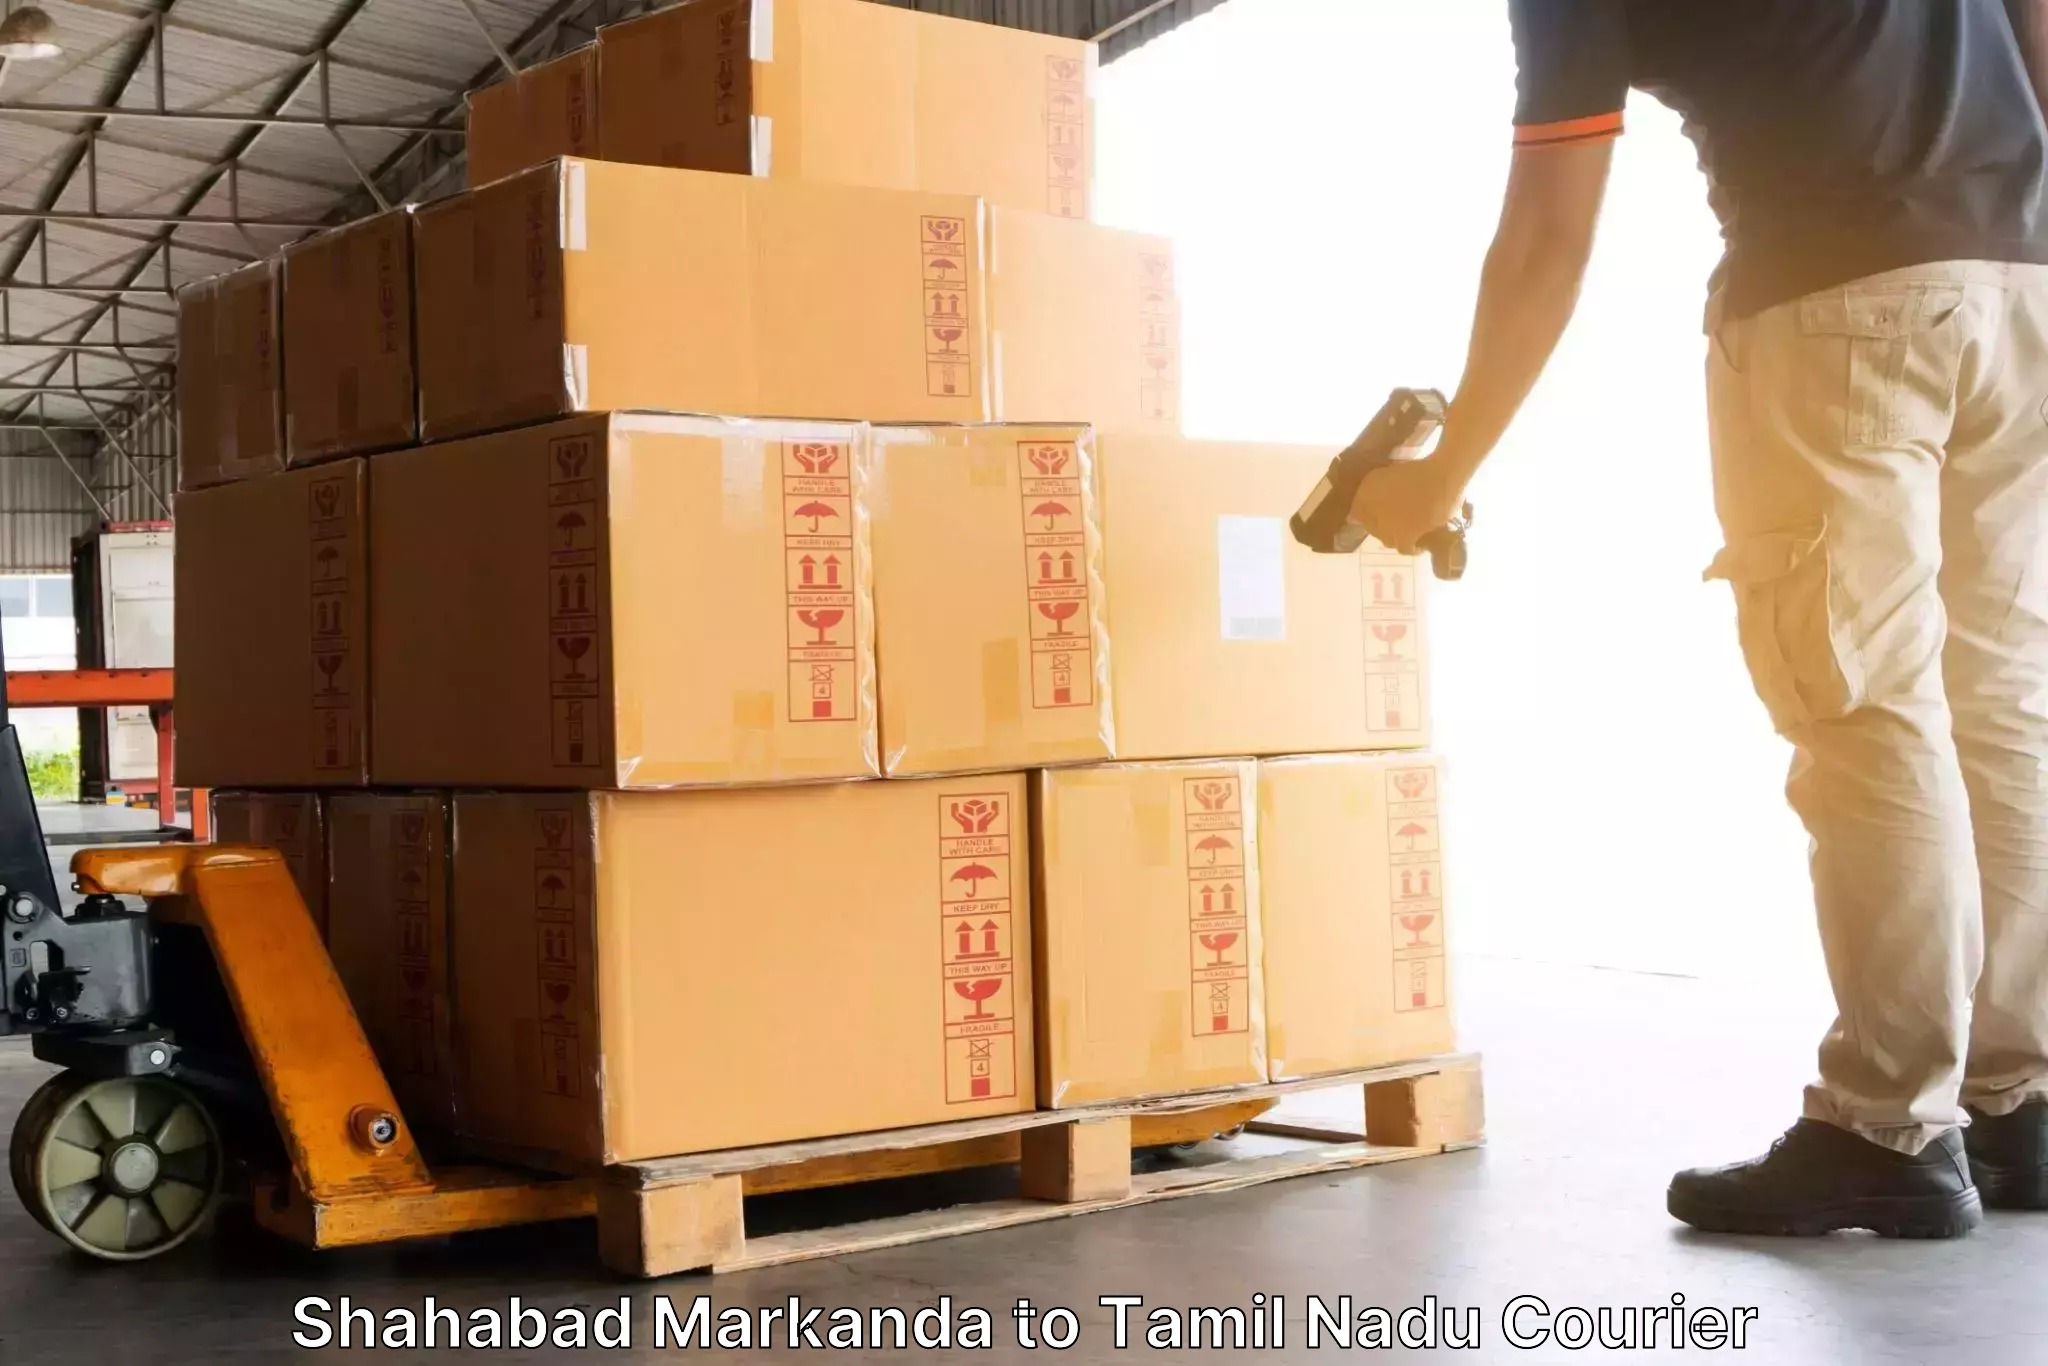 Efficient courier operations Shahabad Markanda to Kanchipuram